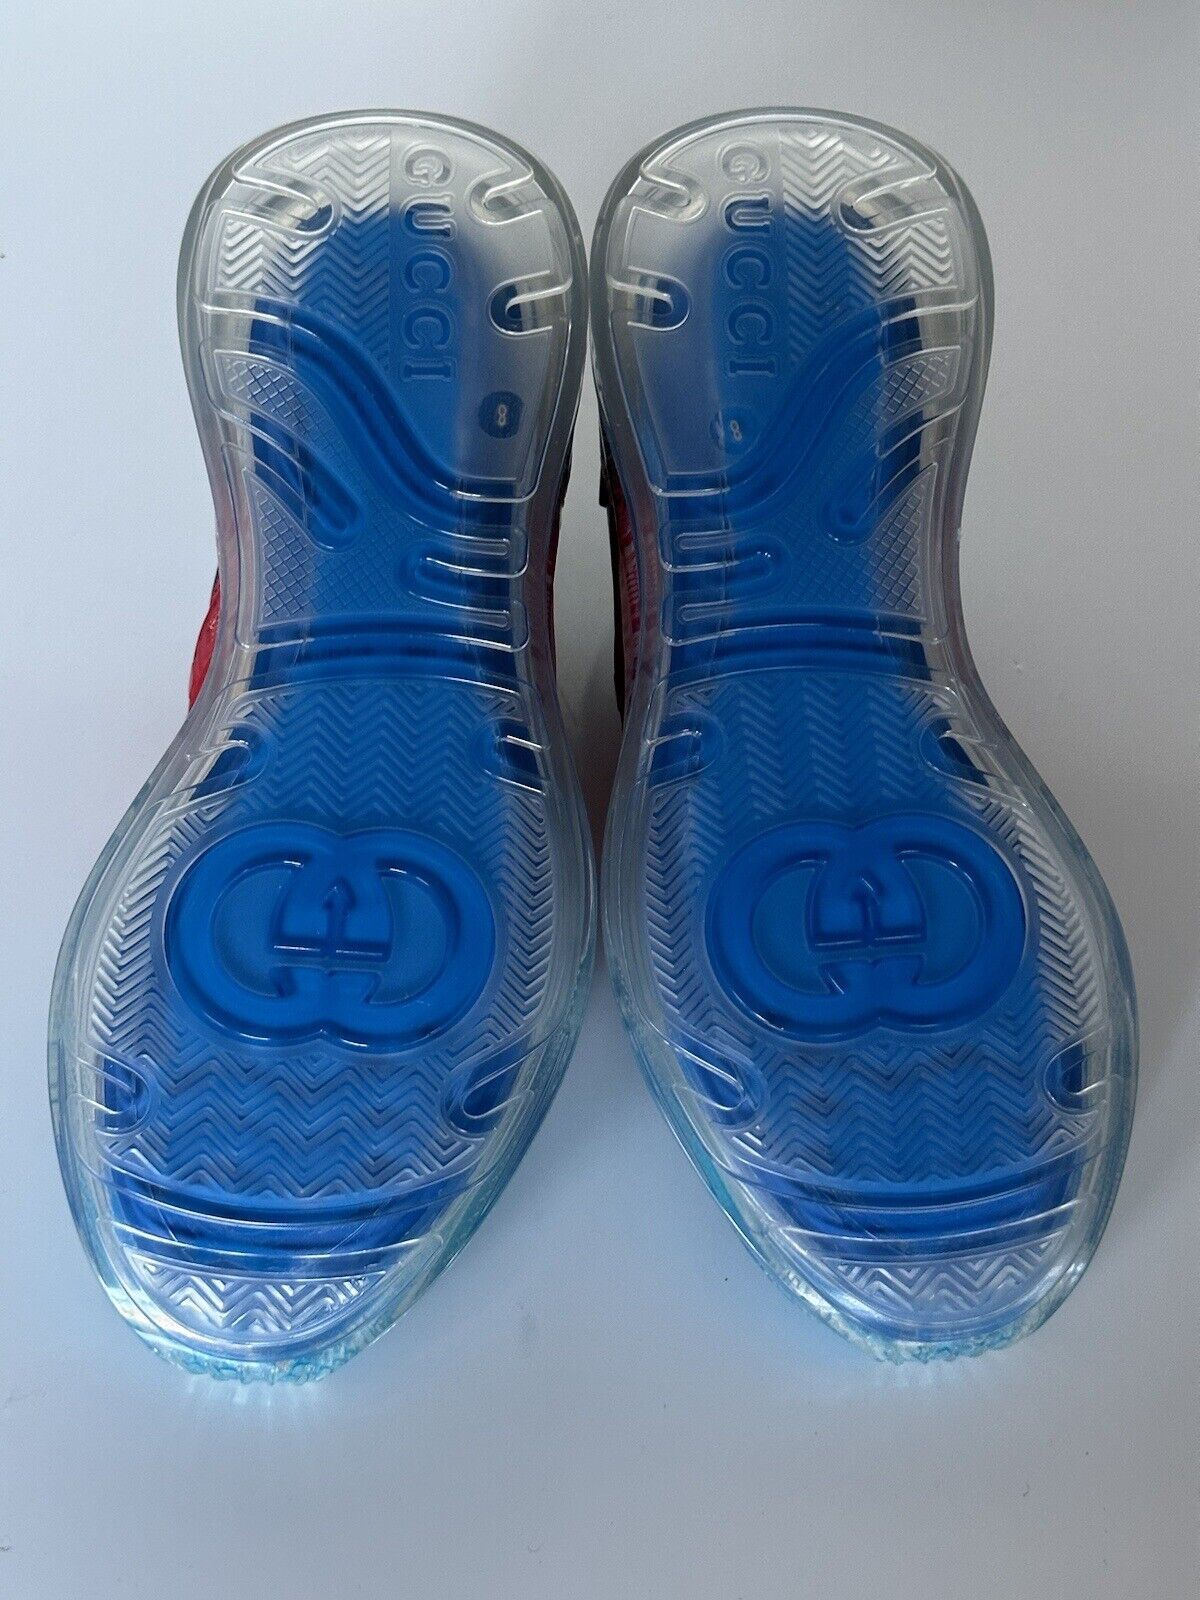 NIB Gucci Ultrapace R Sneakers in Schwarz/Rot/Blau 8,5 US (Gucci 8) 634298 Italien 